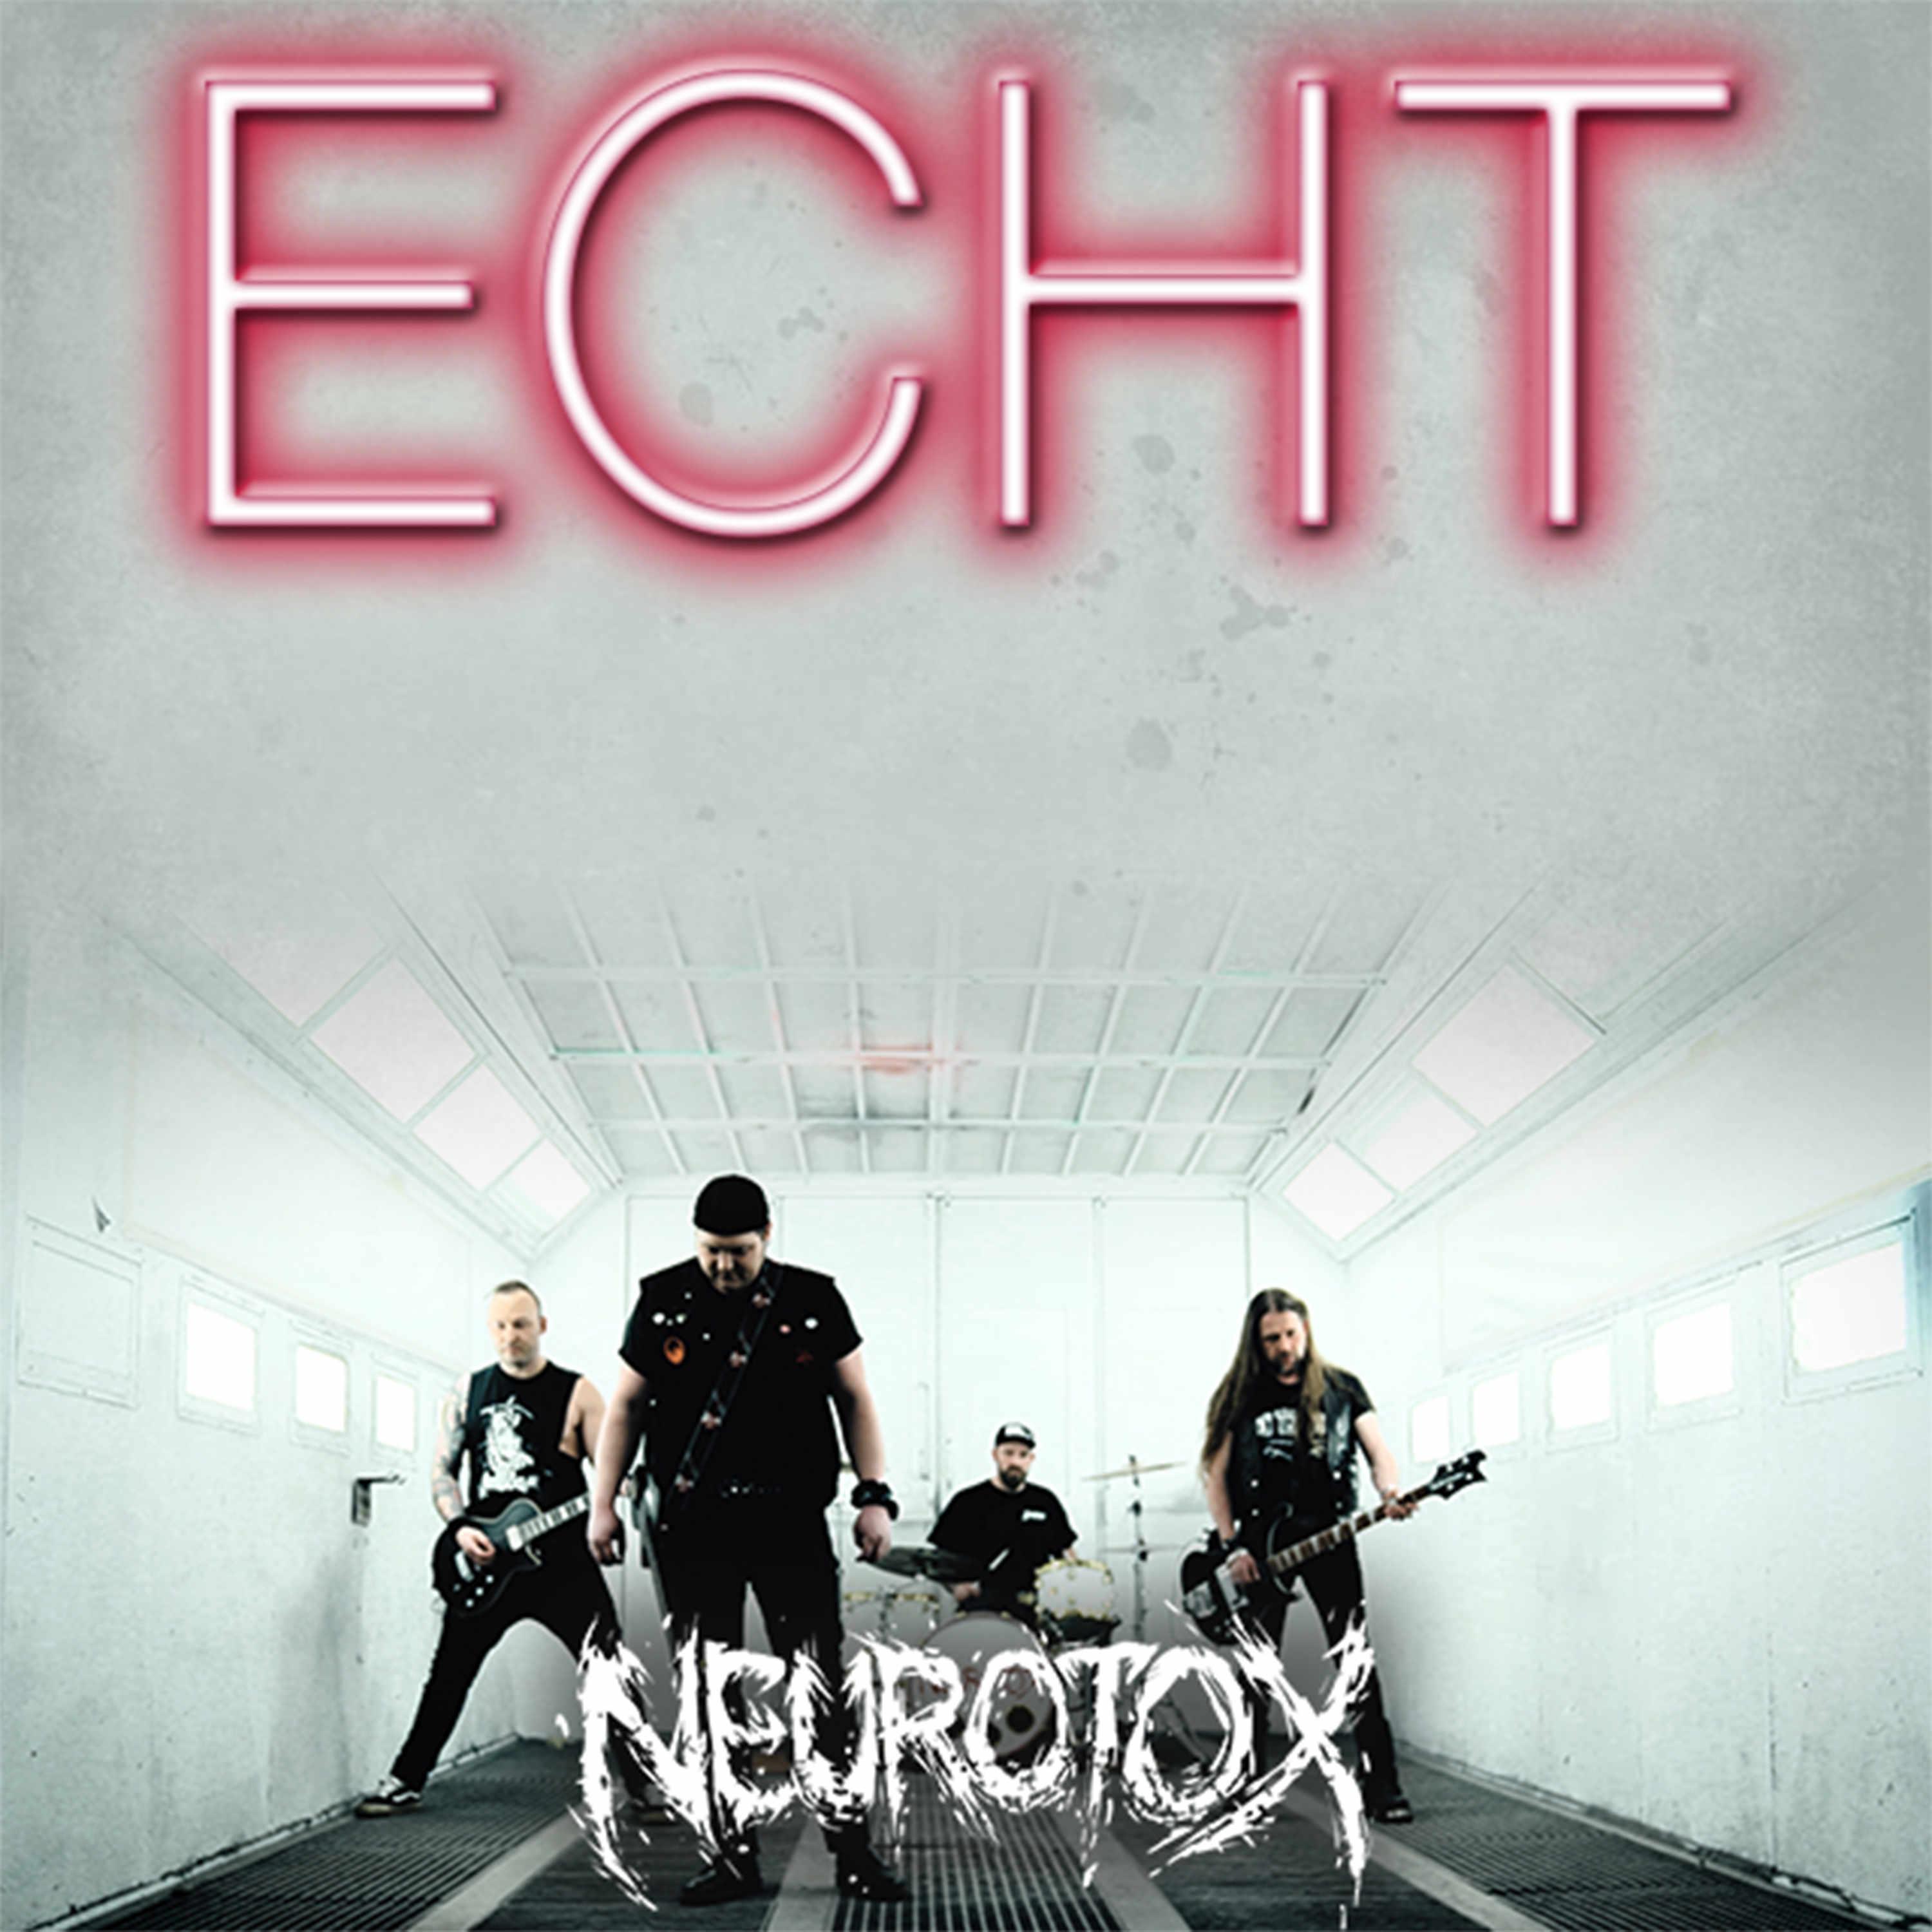 Постер альбома Echt